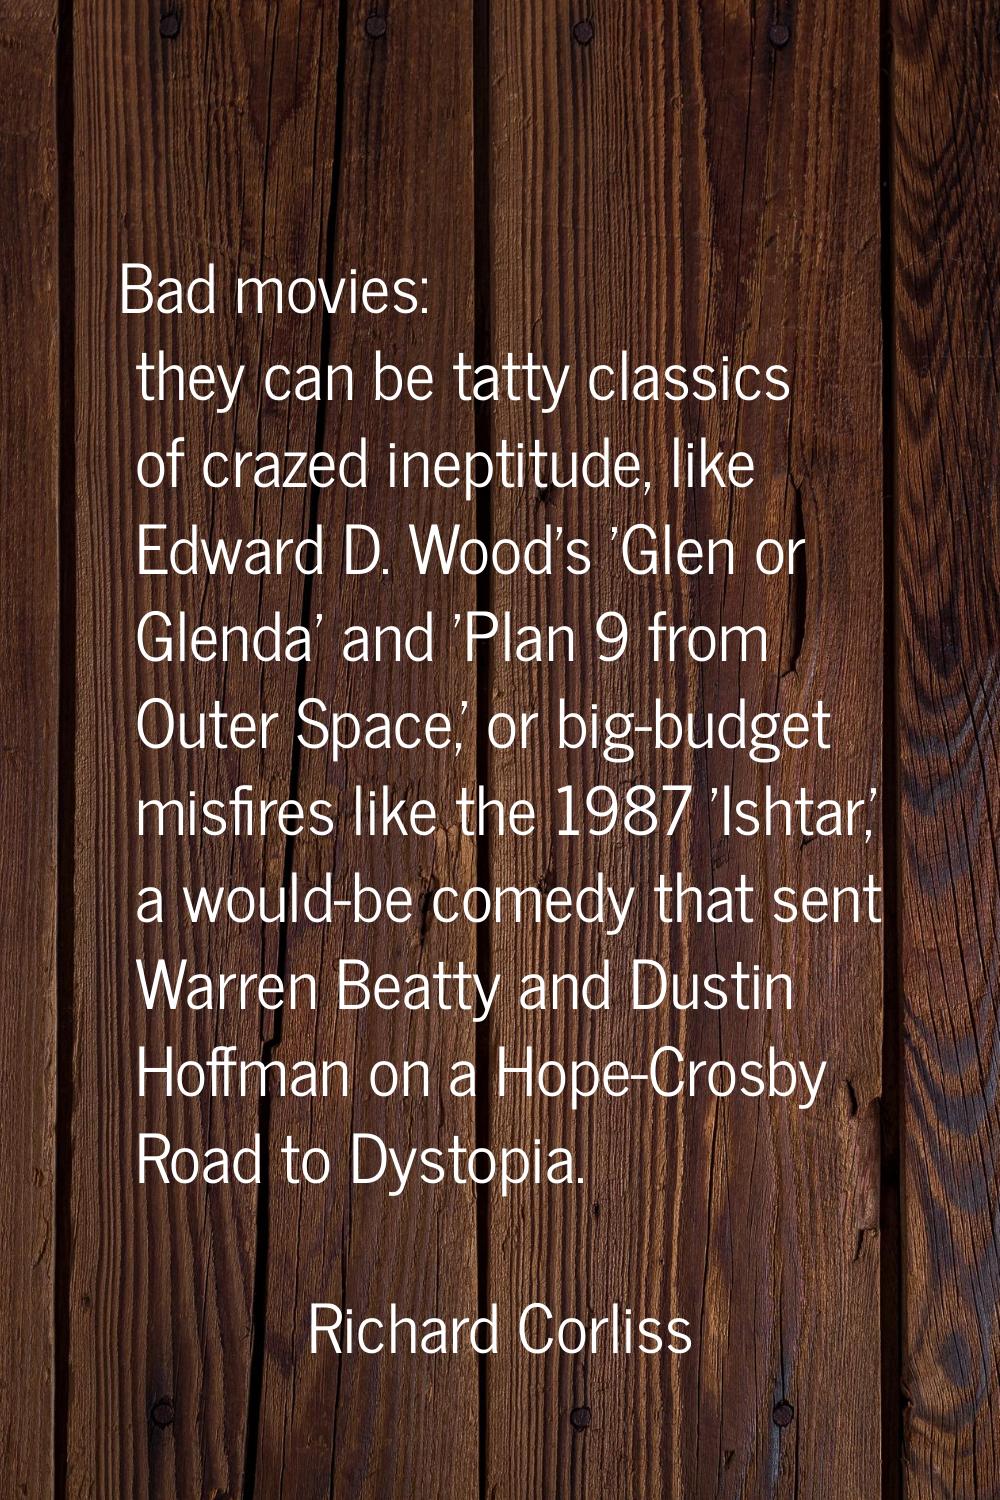 Bad movies: they can be tatty classics of crazed ineptitude, like Edward D. Wood's 'Glen or Glenda'